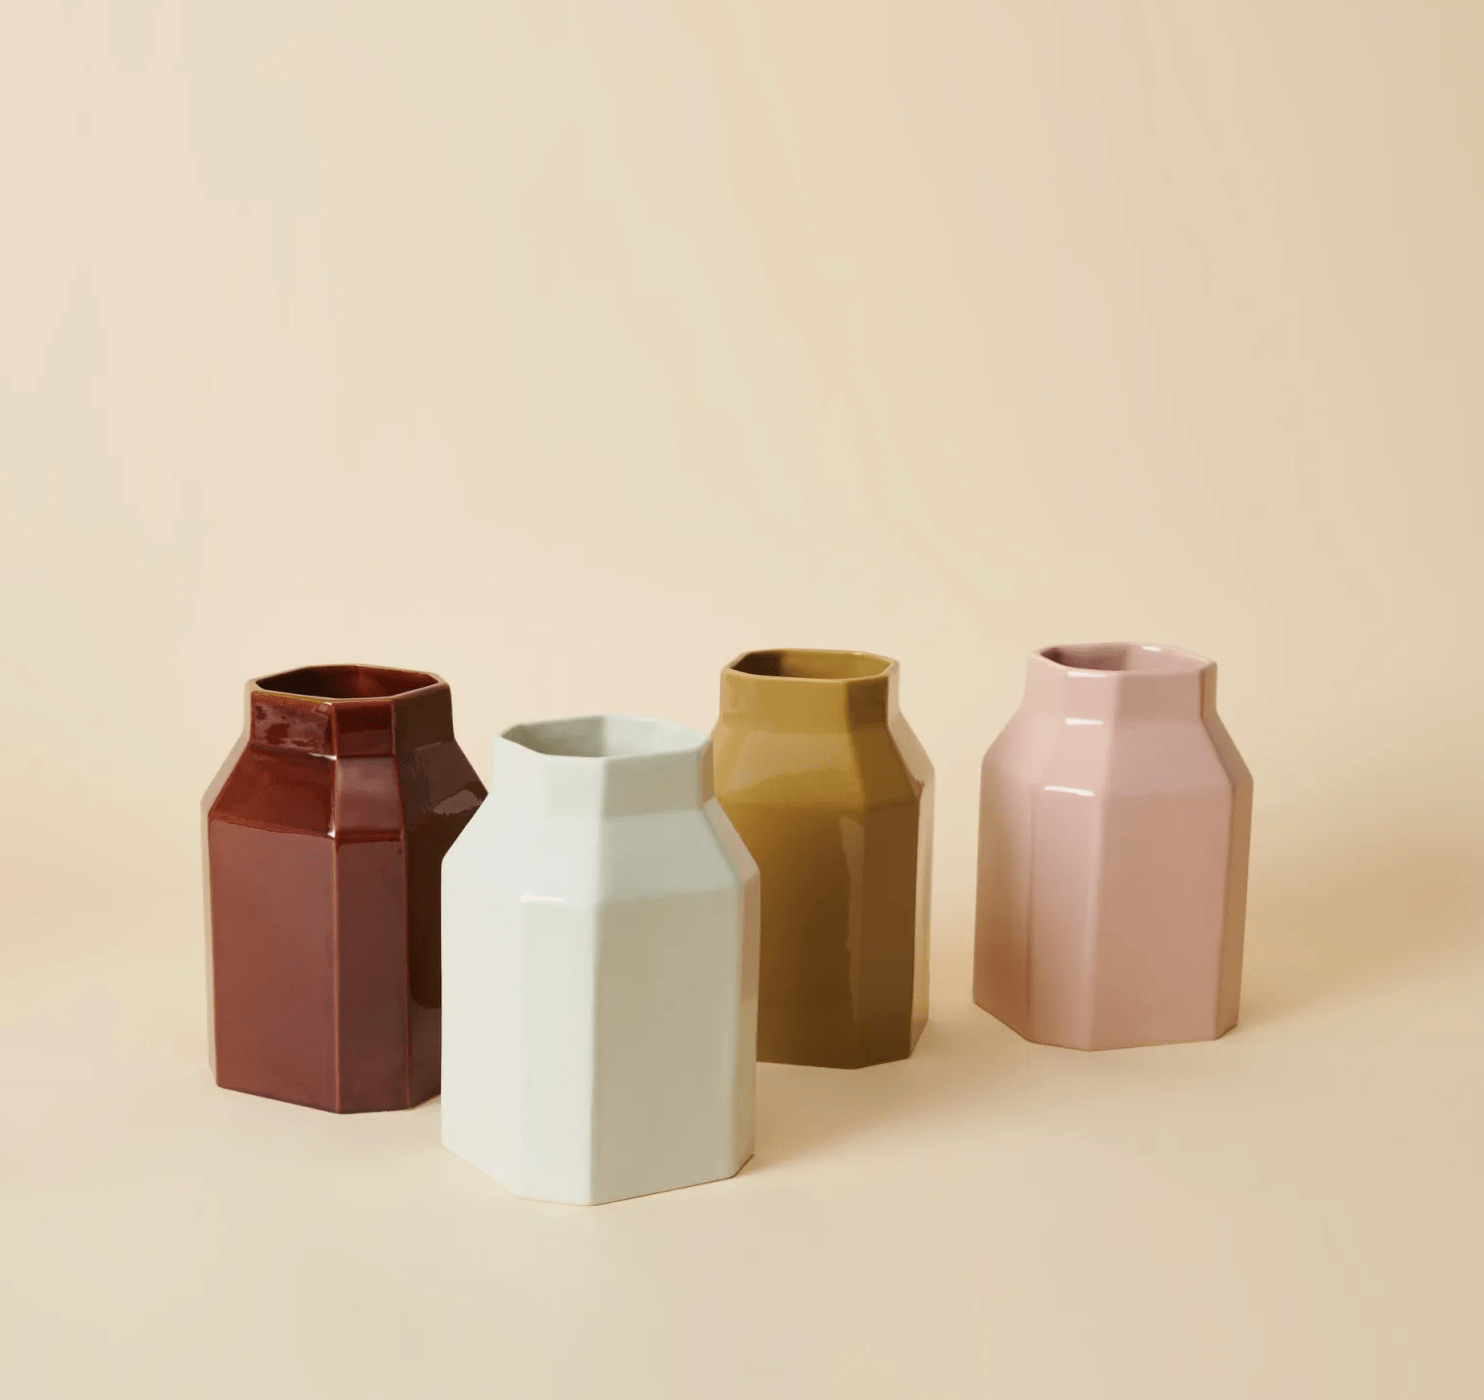 series of colourful handmade ceramic vases